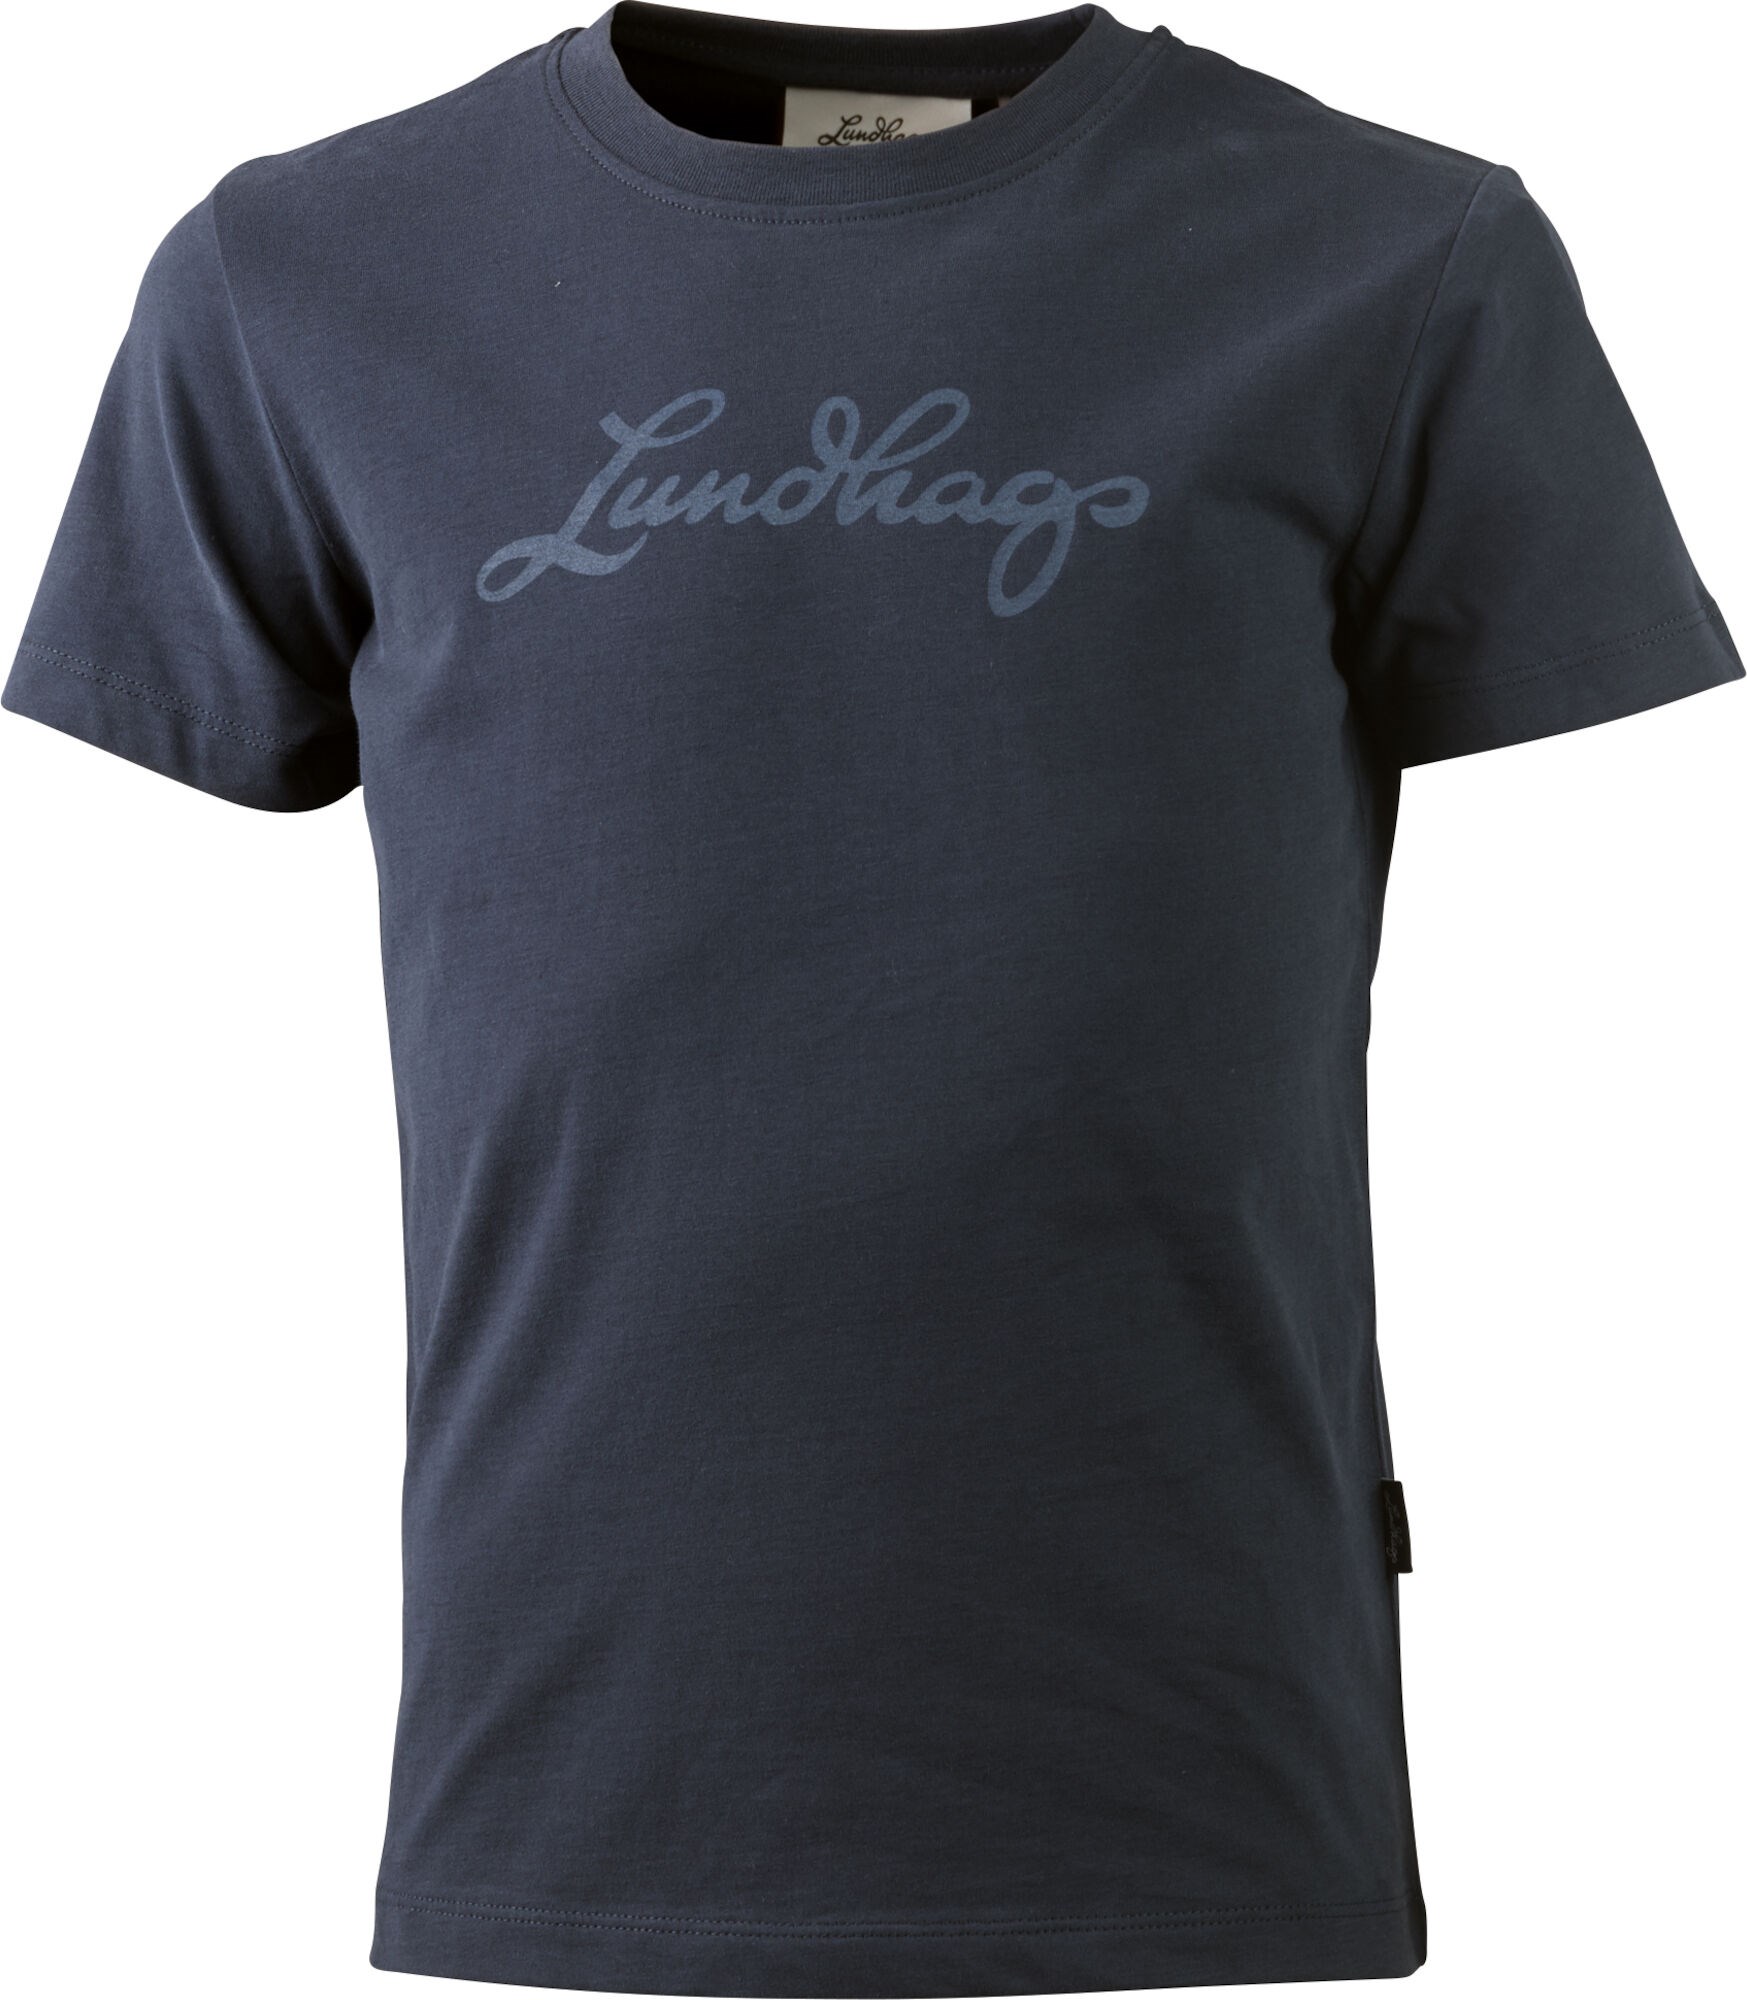 Lundhags T-shirt Junior